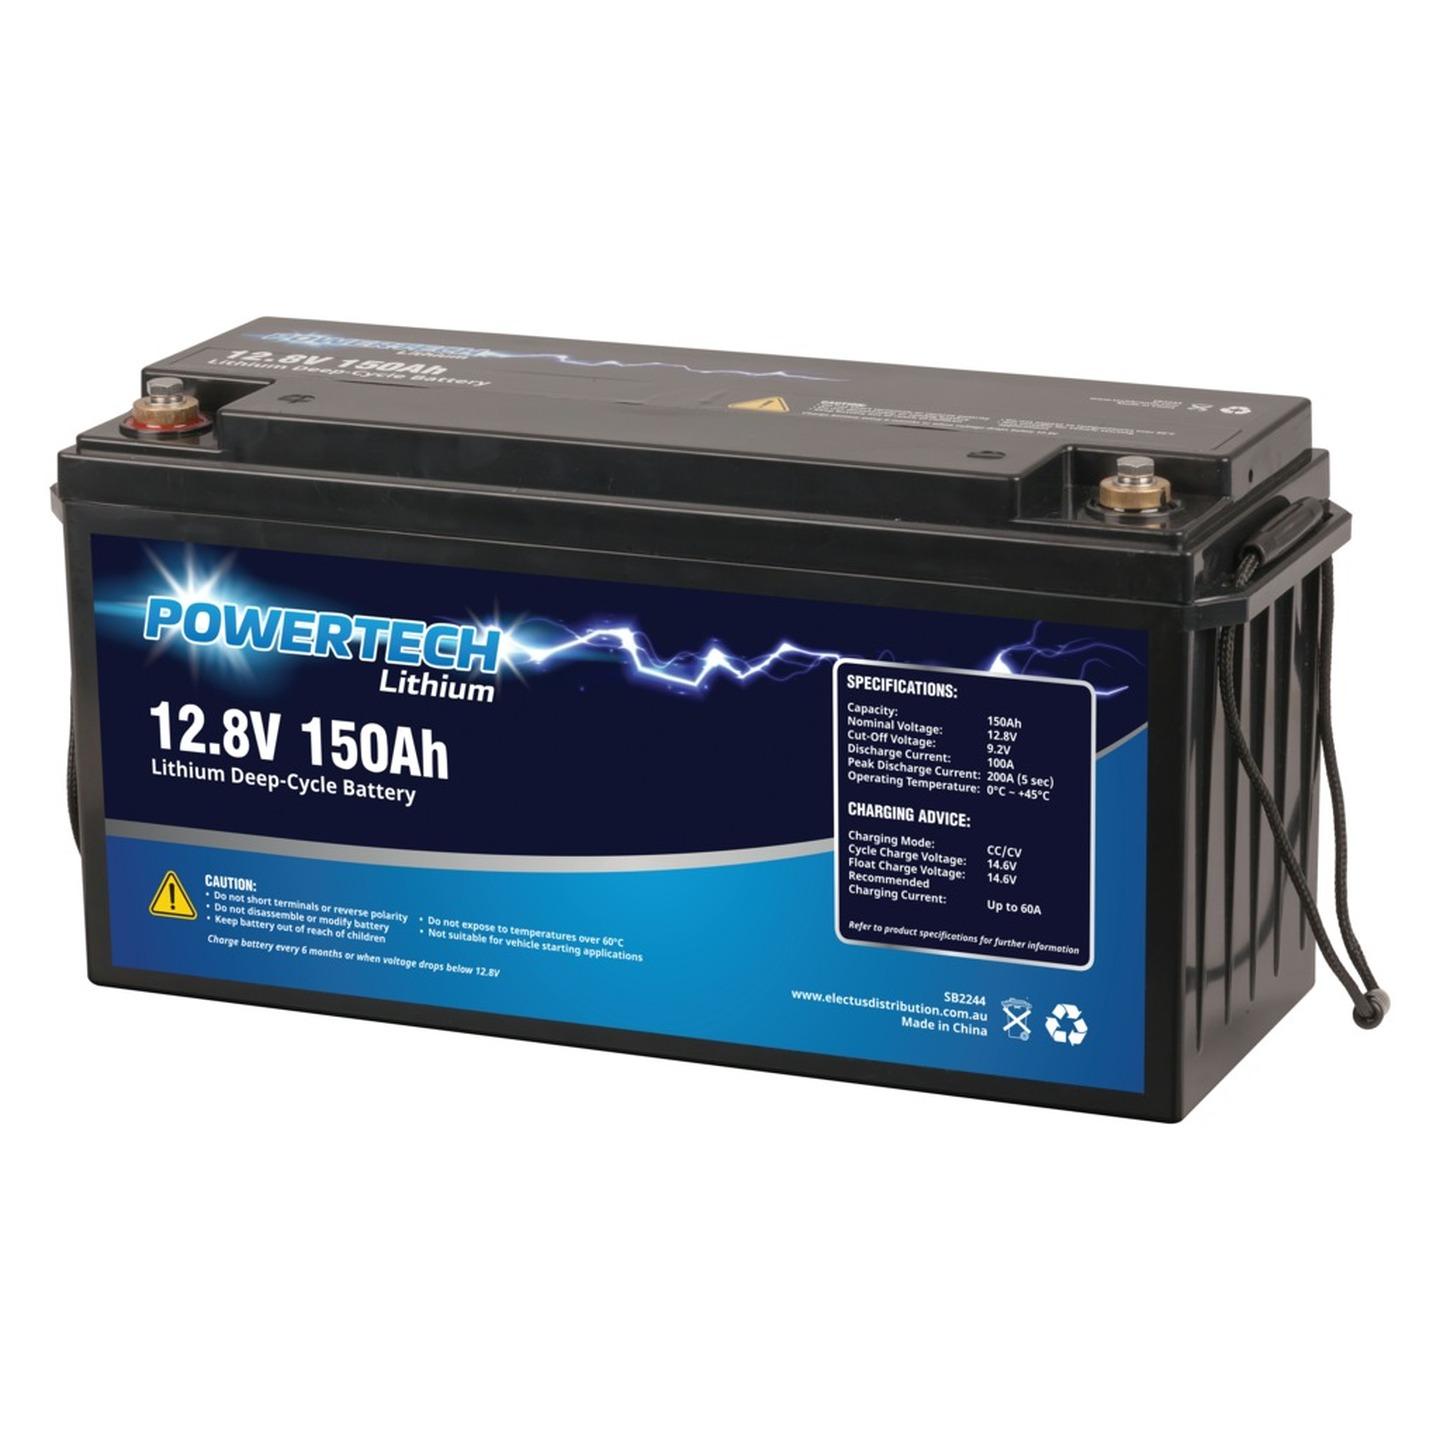 12.8V 150Ah Lithium Deep Cycle Battery